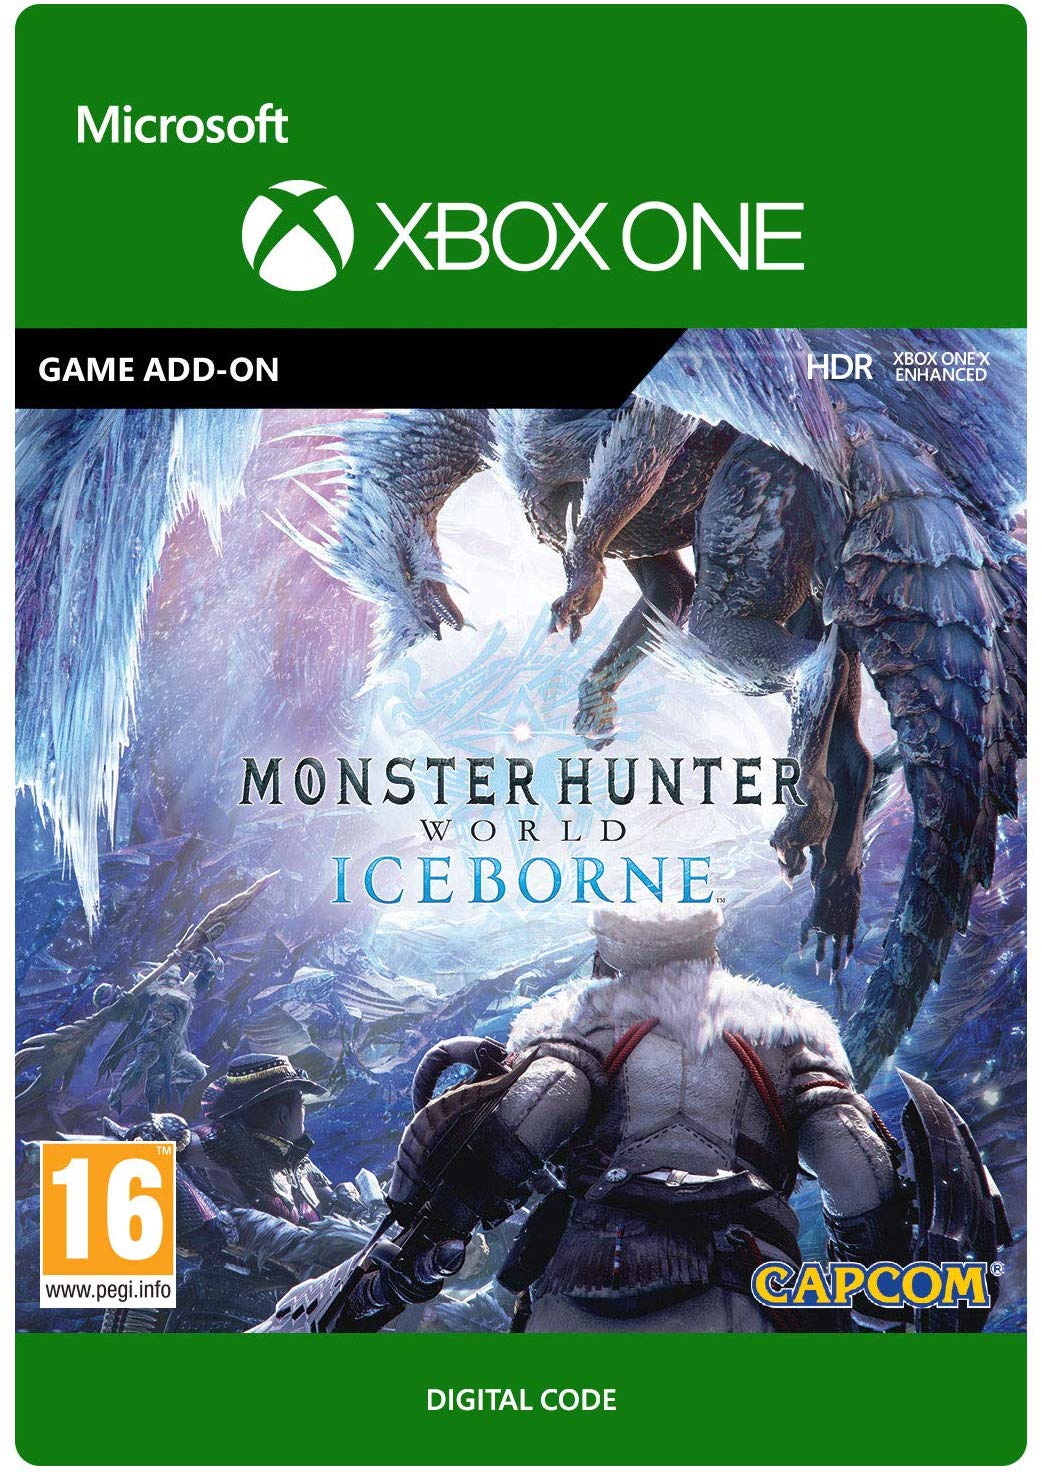 Monster Hunter World: Iceborne Digital Download Key (Xbox One): GLOBAL (works worldwide)